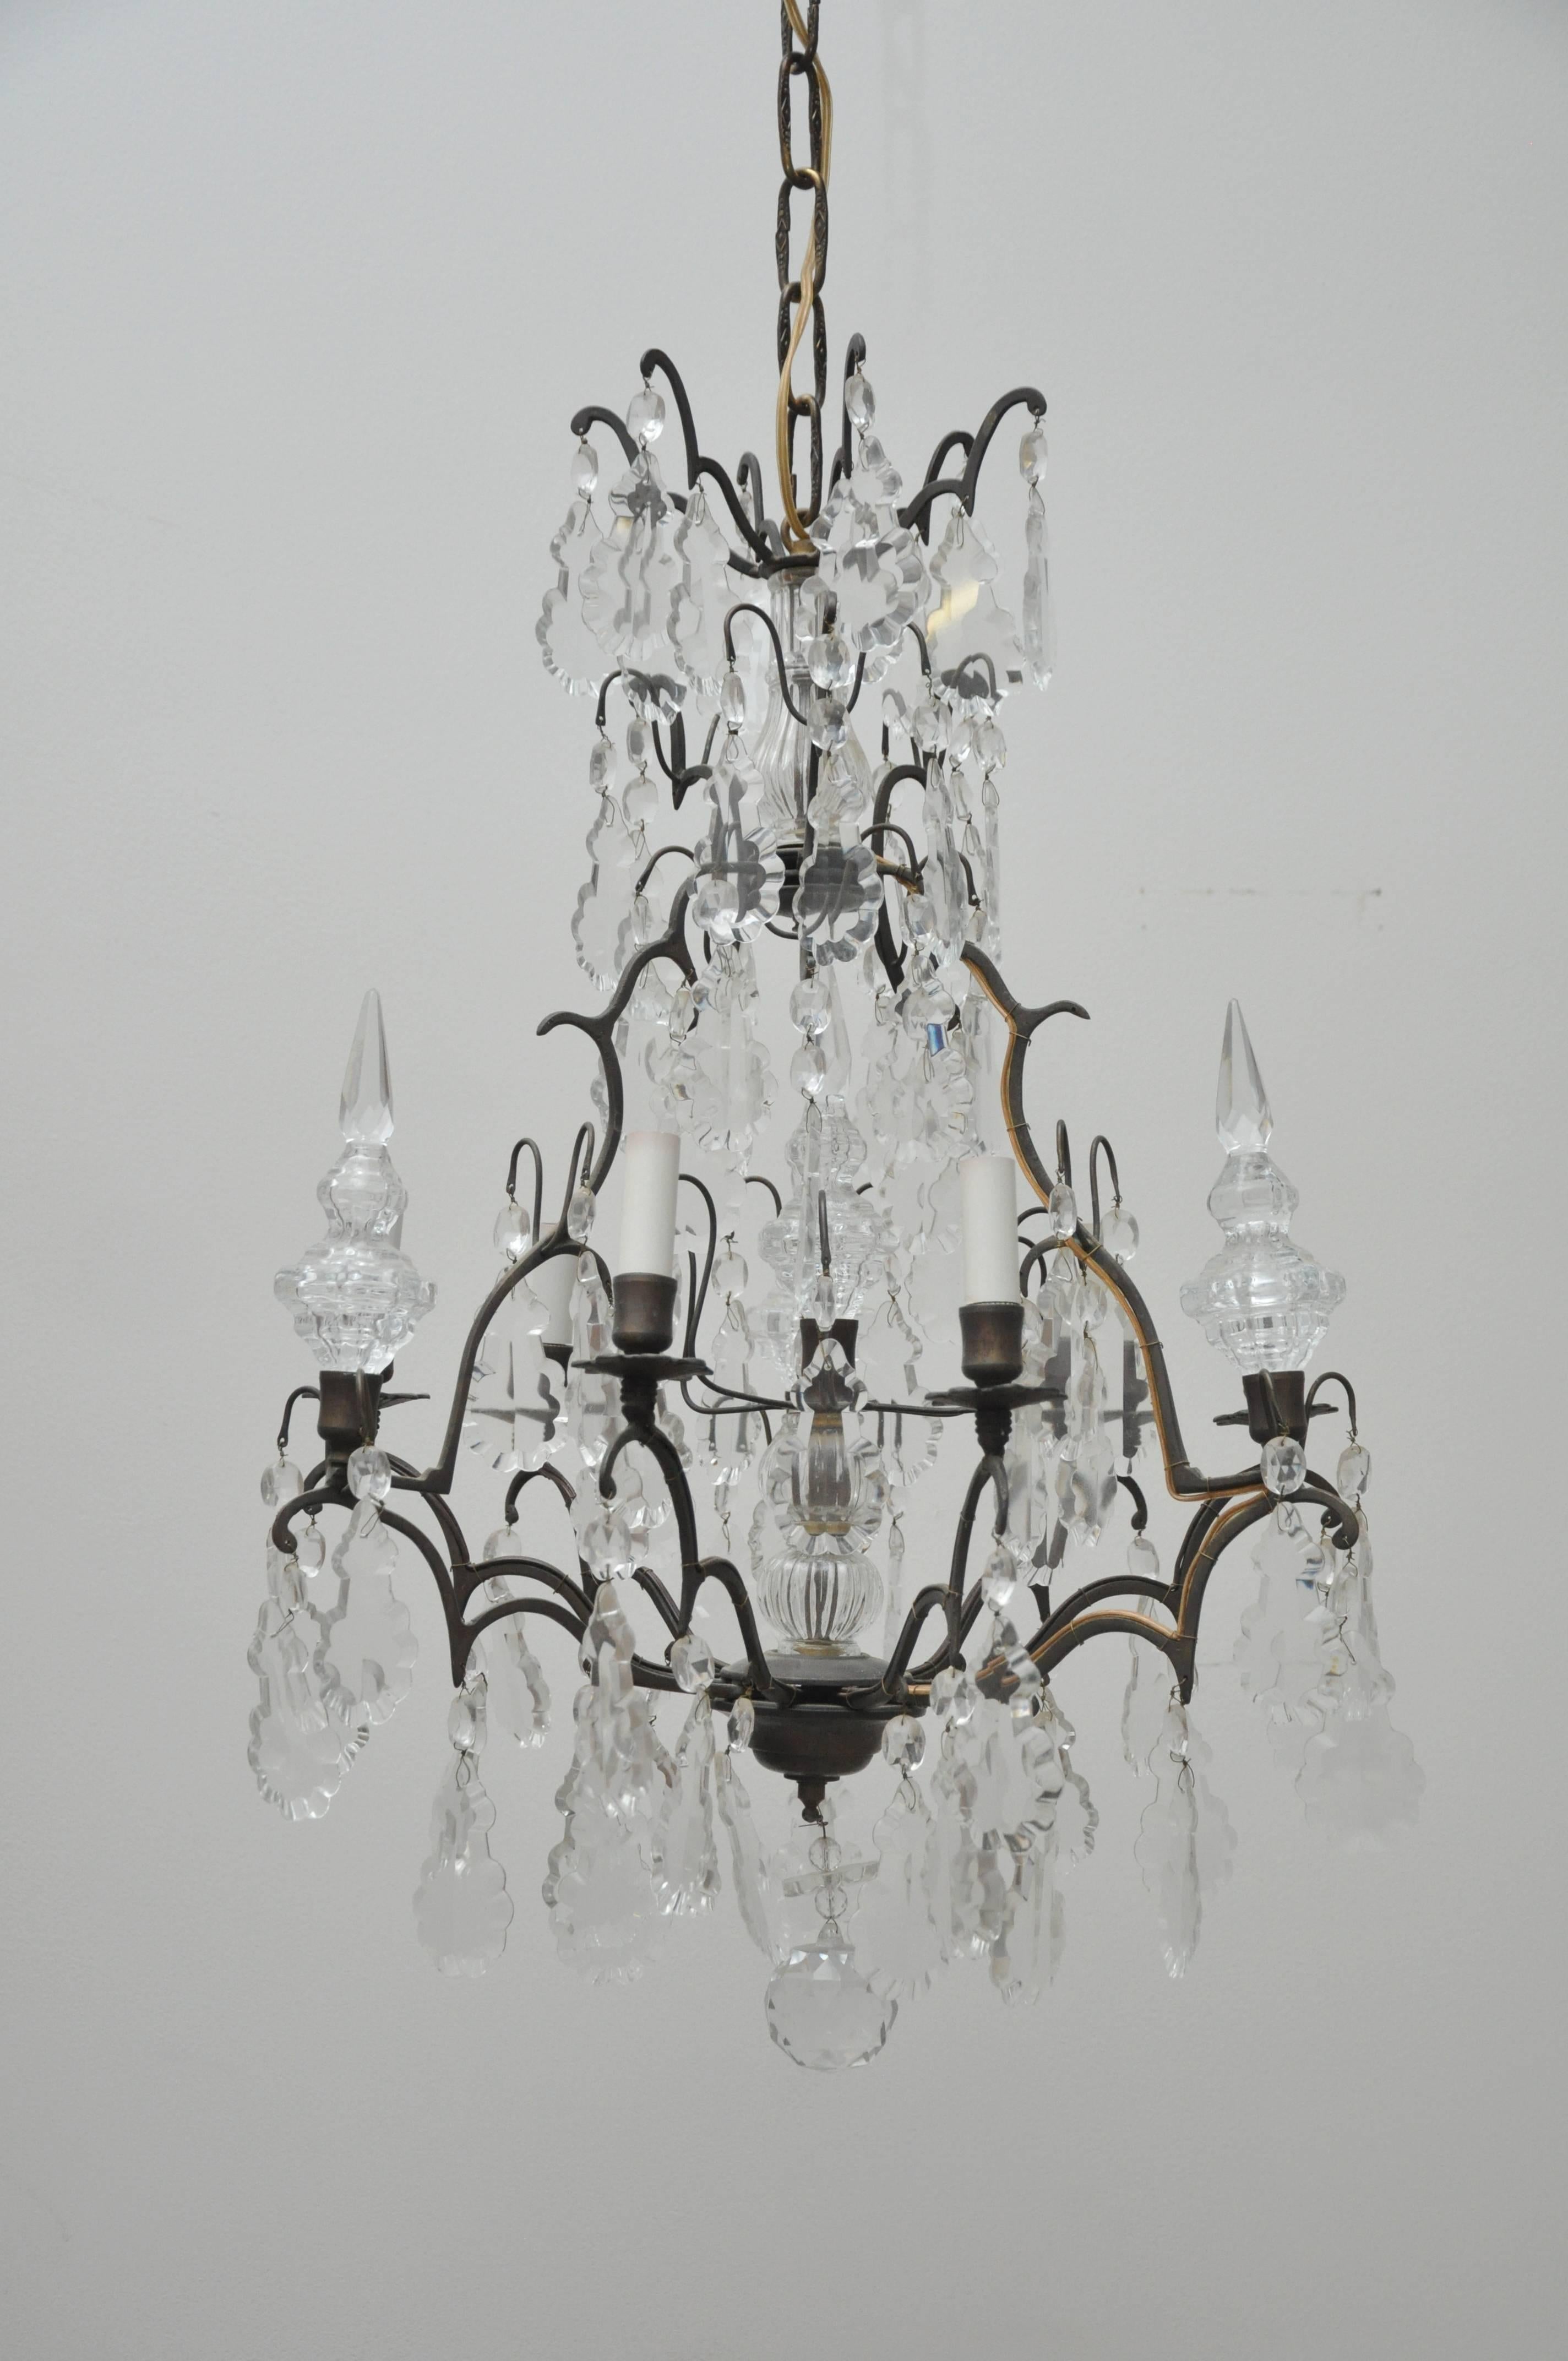 Czech. Glass chandelier late 19th century.